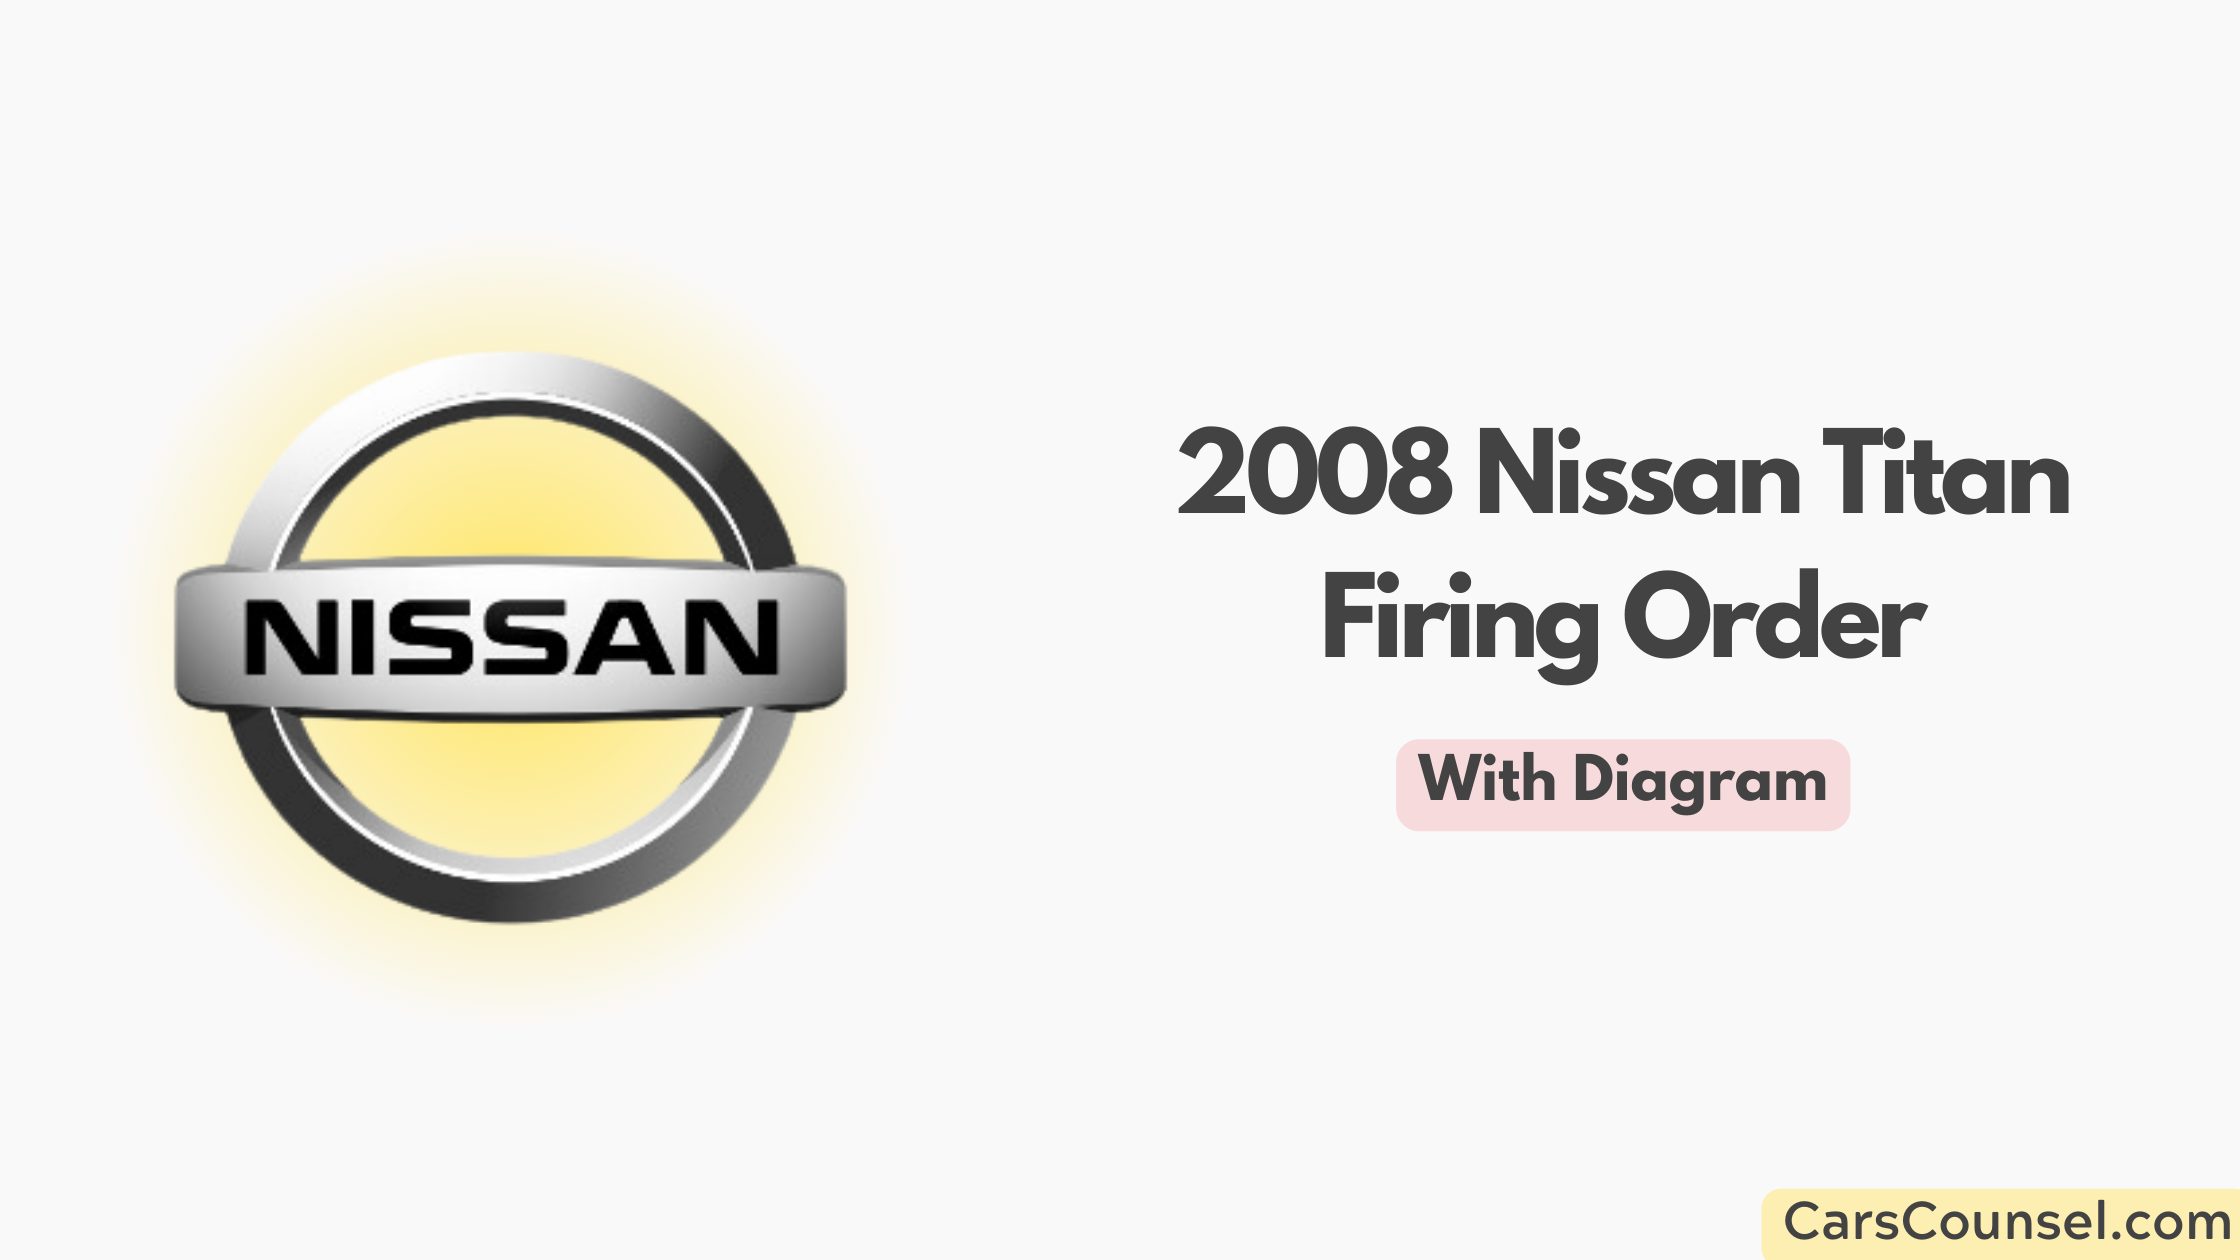 2008 Nissan Titan Firing Order With Diagram